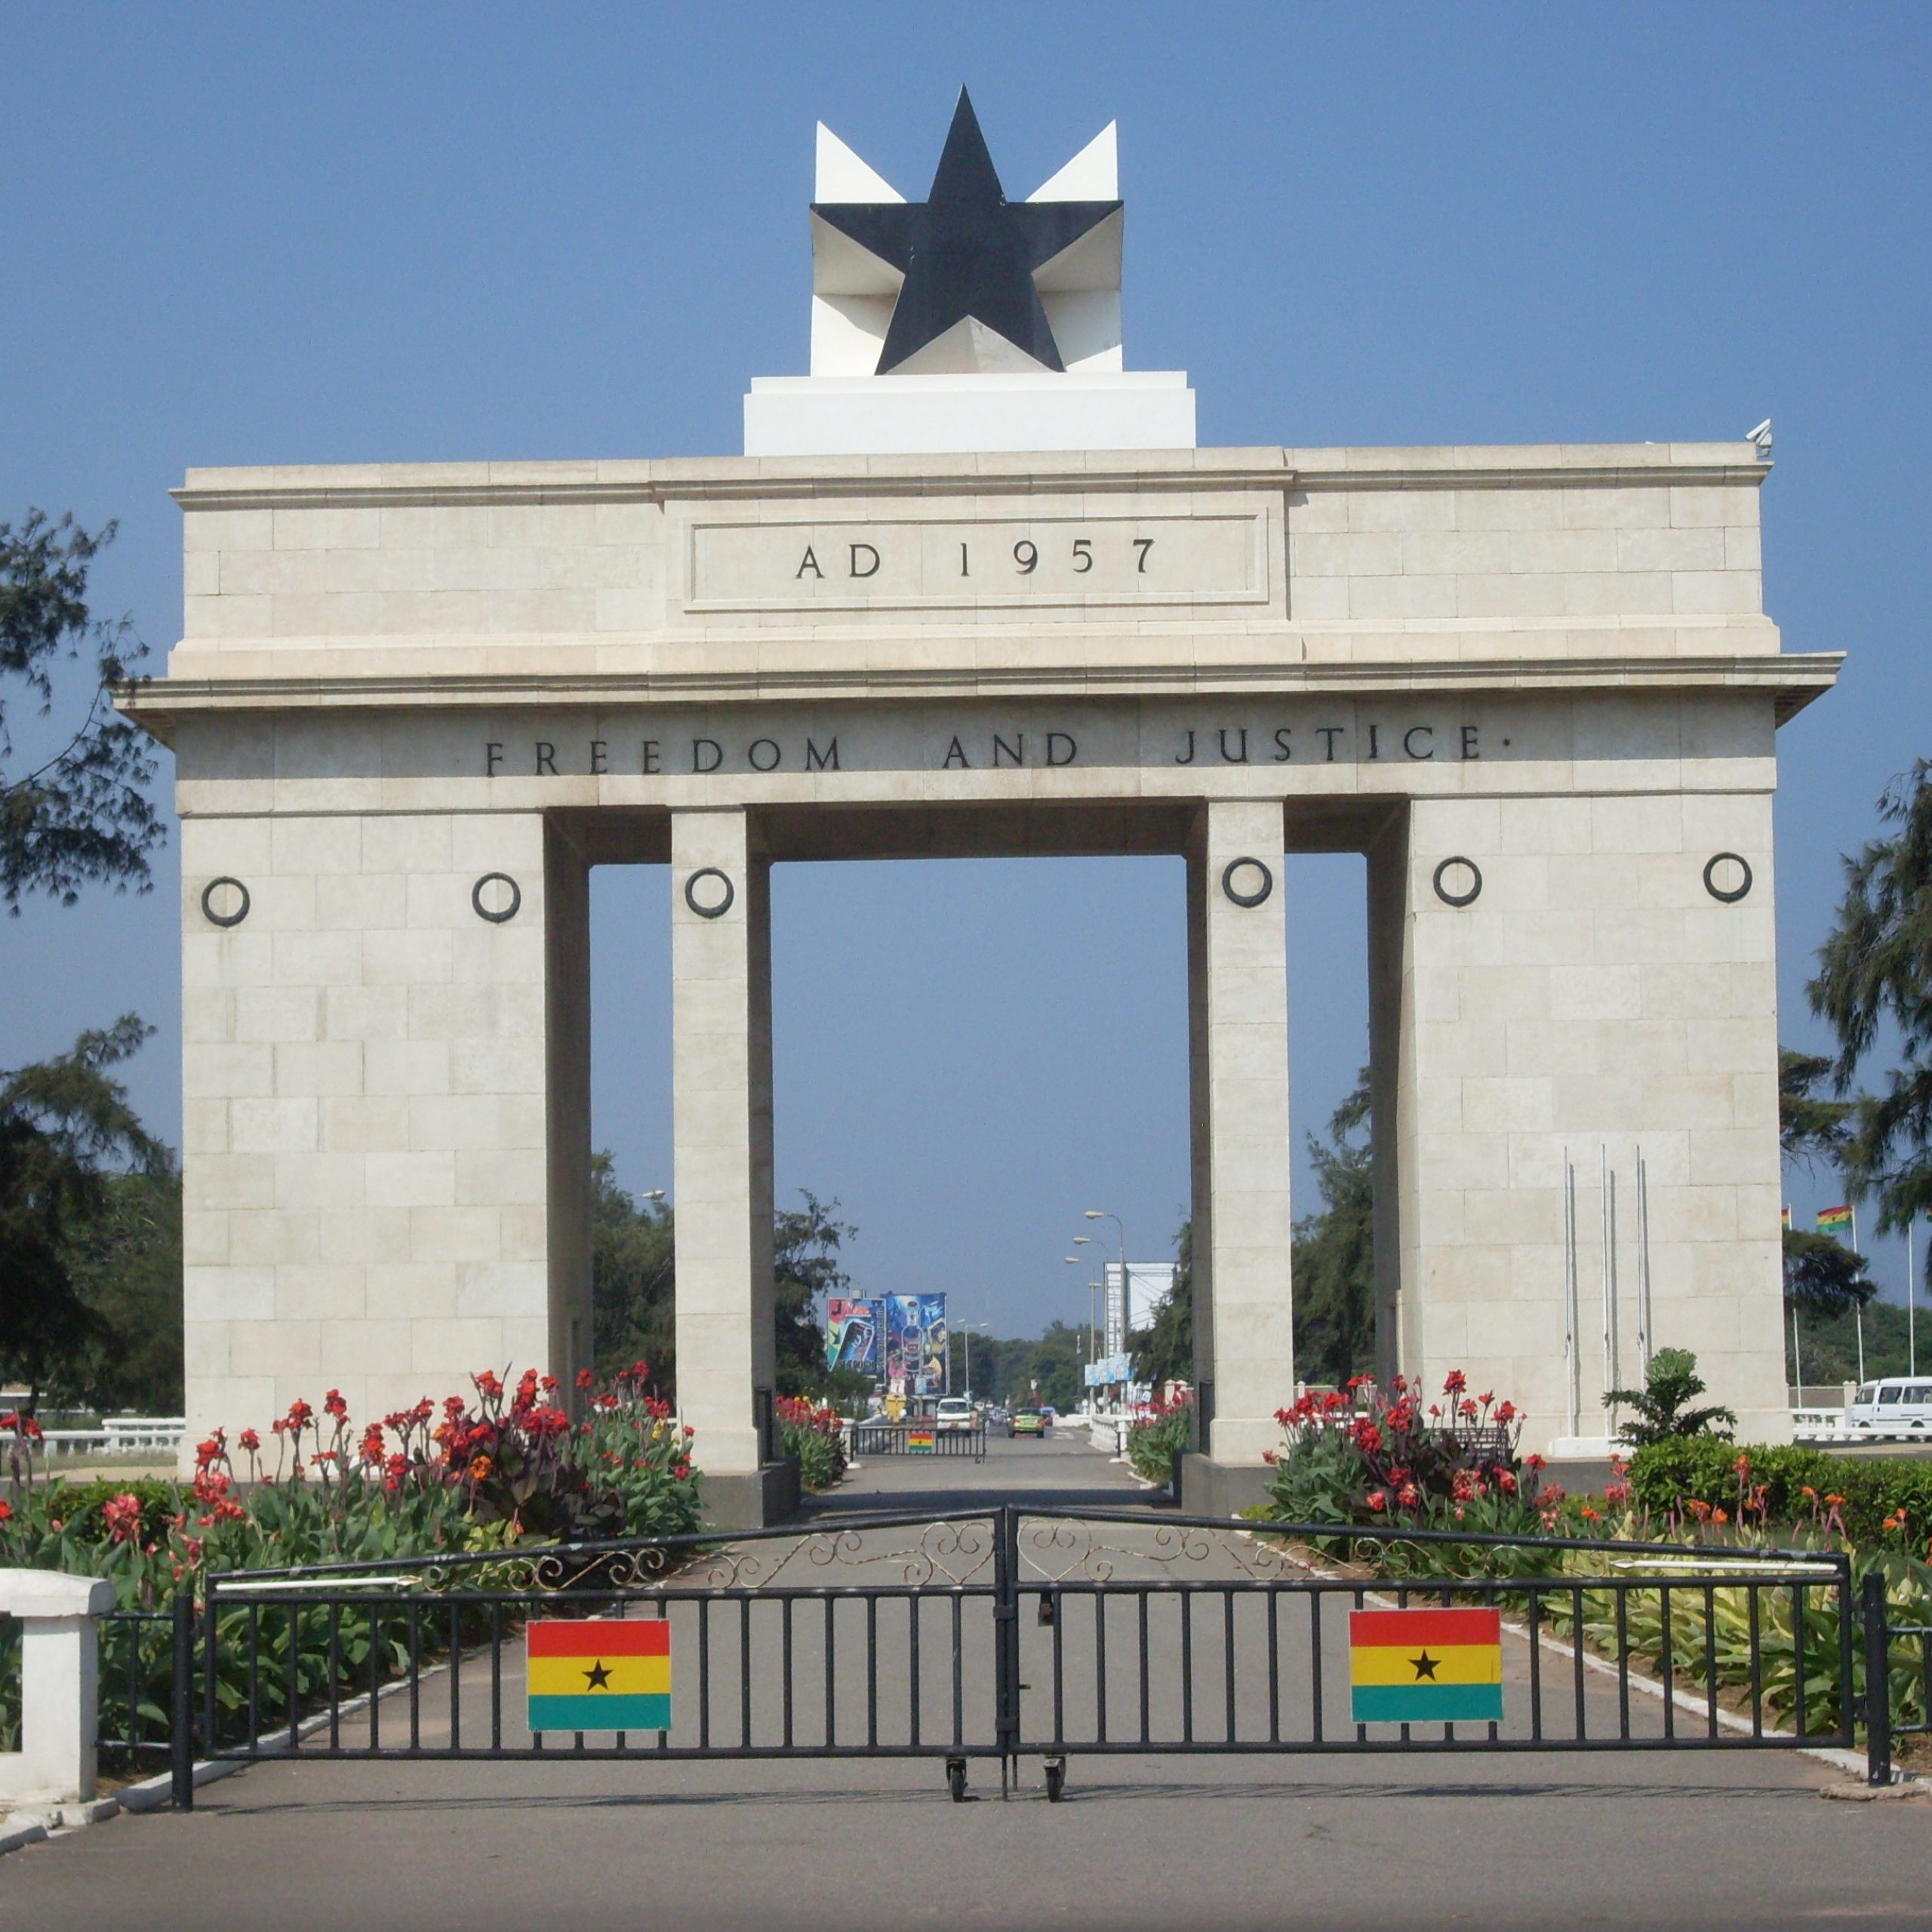 DAY 1: ACCRA – GHANA